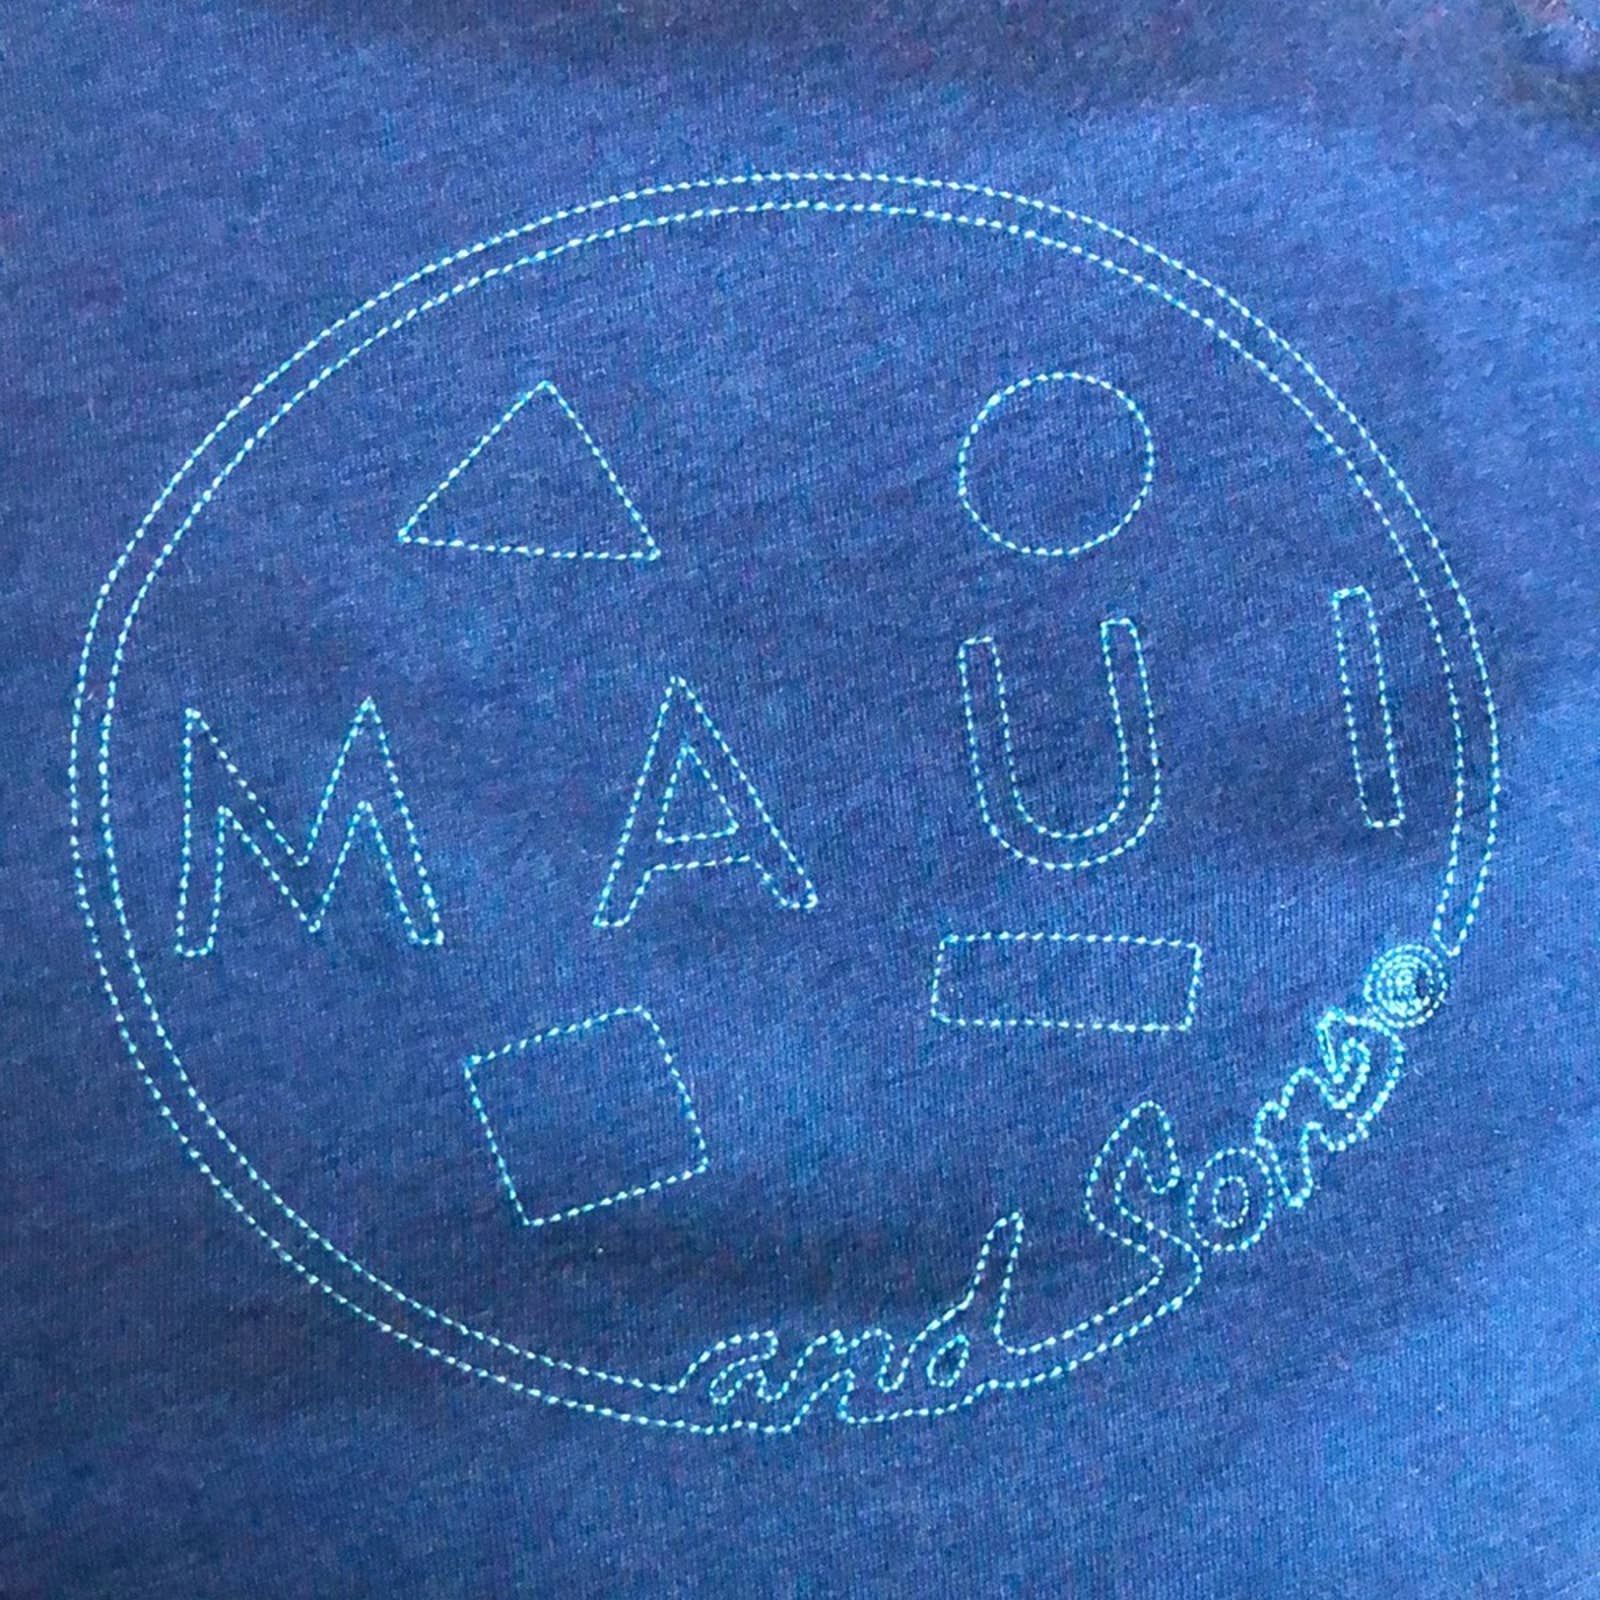 Maui And Sons Maui & Sons Navy Blue Long Sweatshirt Size Medium Size M / US 6-8 / IT 42-44 - 5 Thumbnail